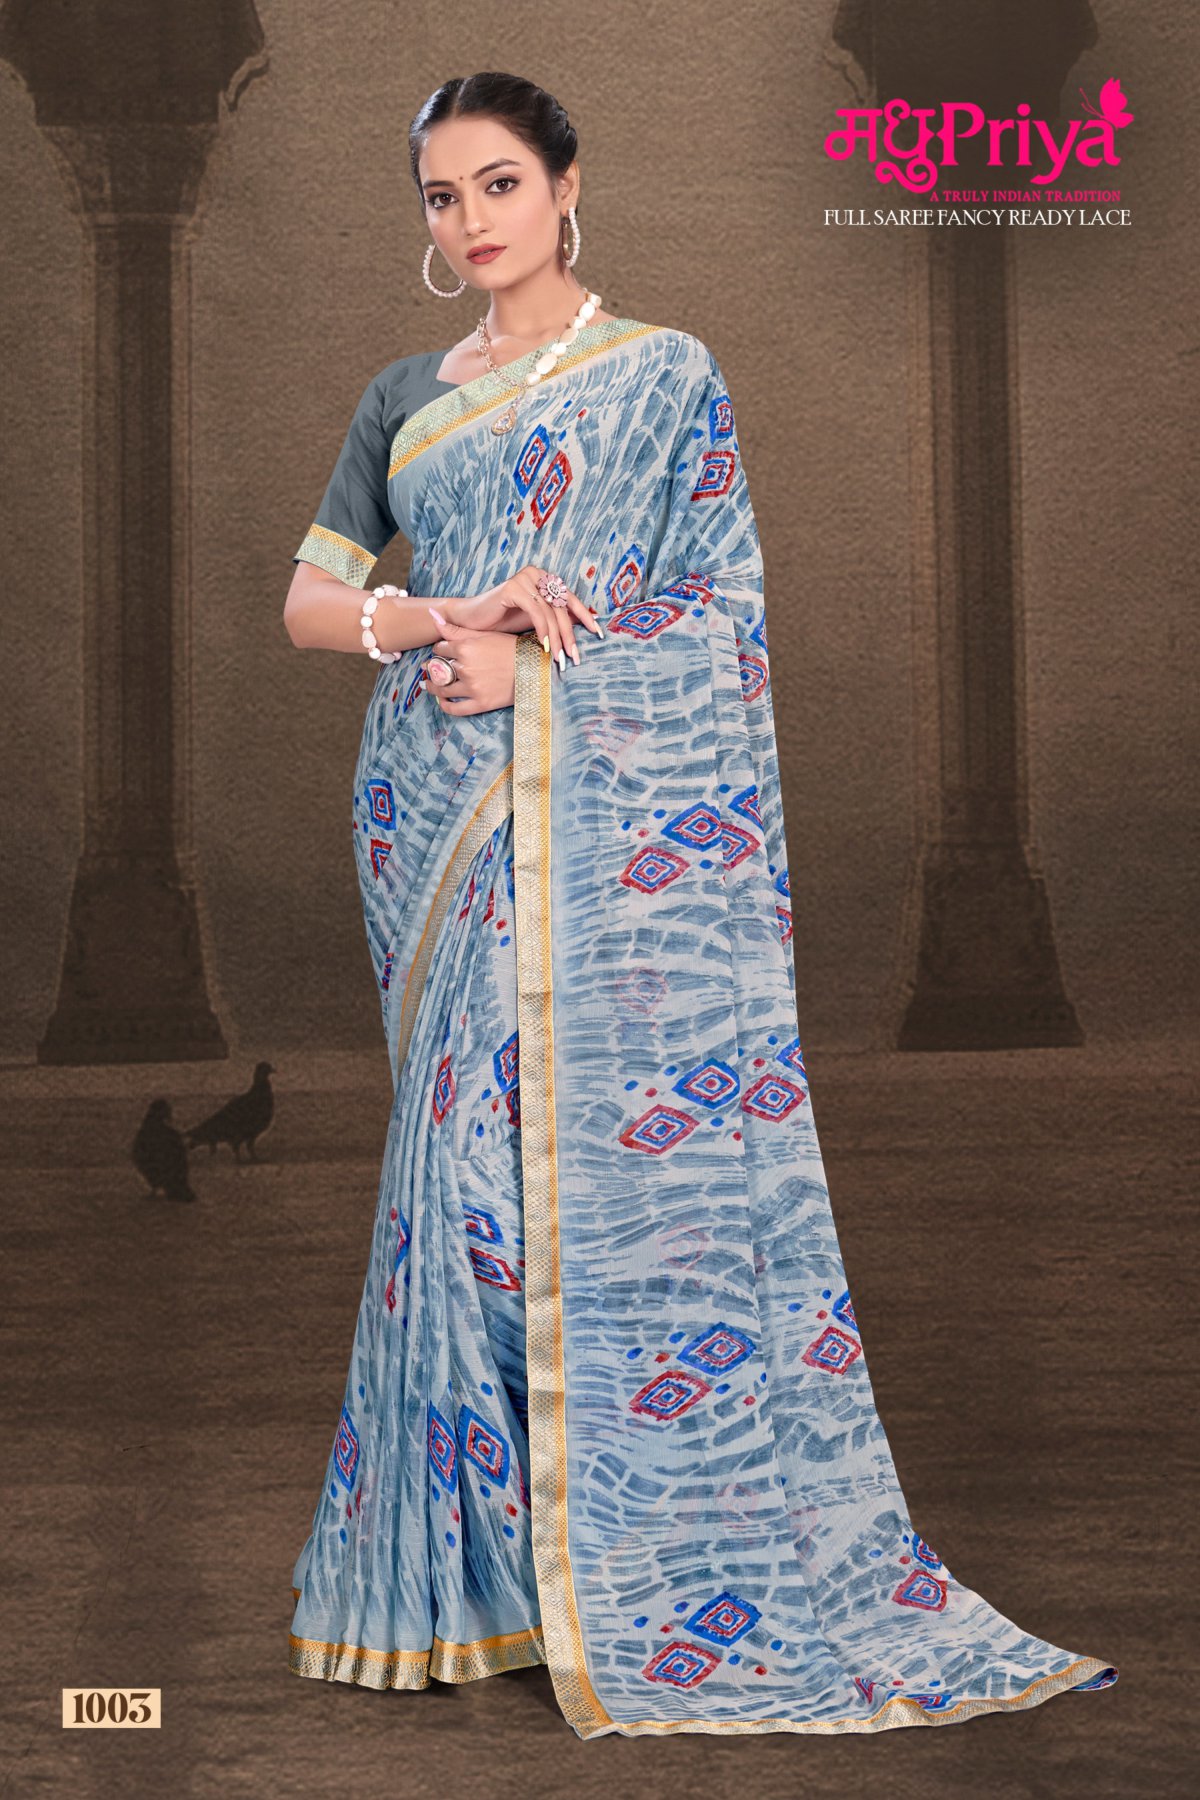 Madhupriya Lekha Wholesale Full Saree Fancy Lace Sarees